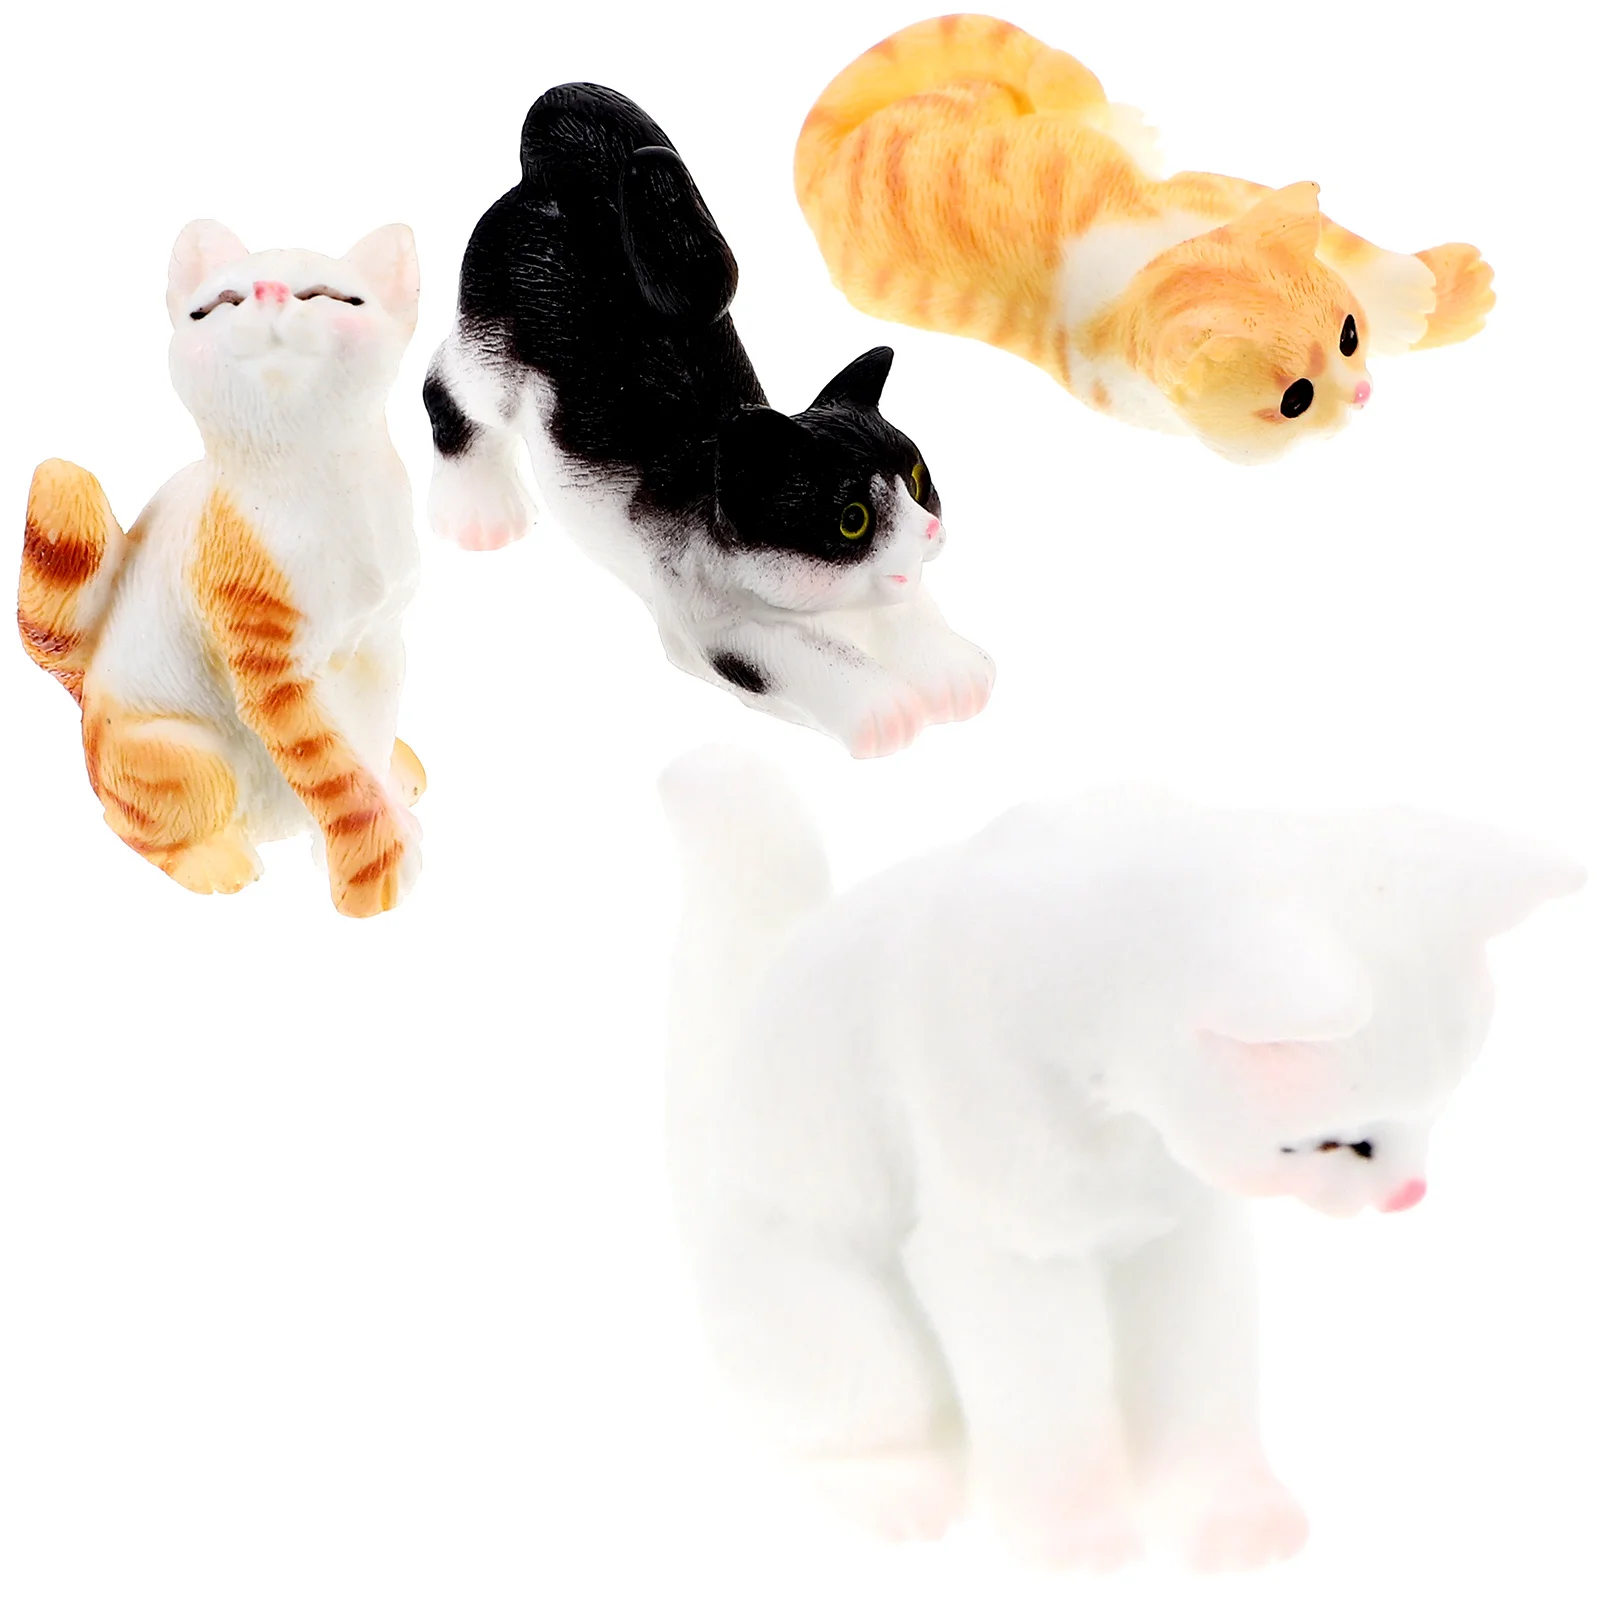 4 Pcs Dollhouse Orange Cat Models Miniature Figurine Decorative Supplies Cat Sculptures Resin Statues